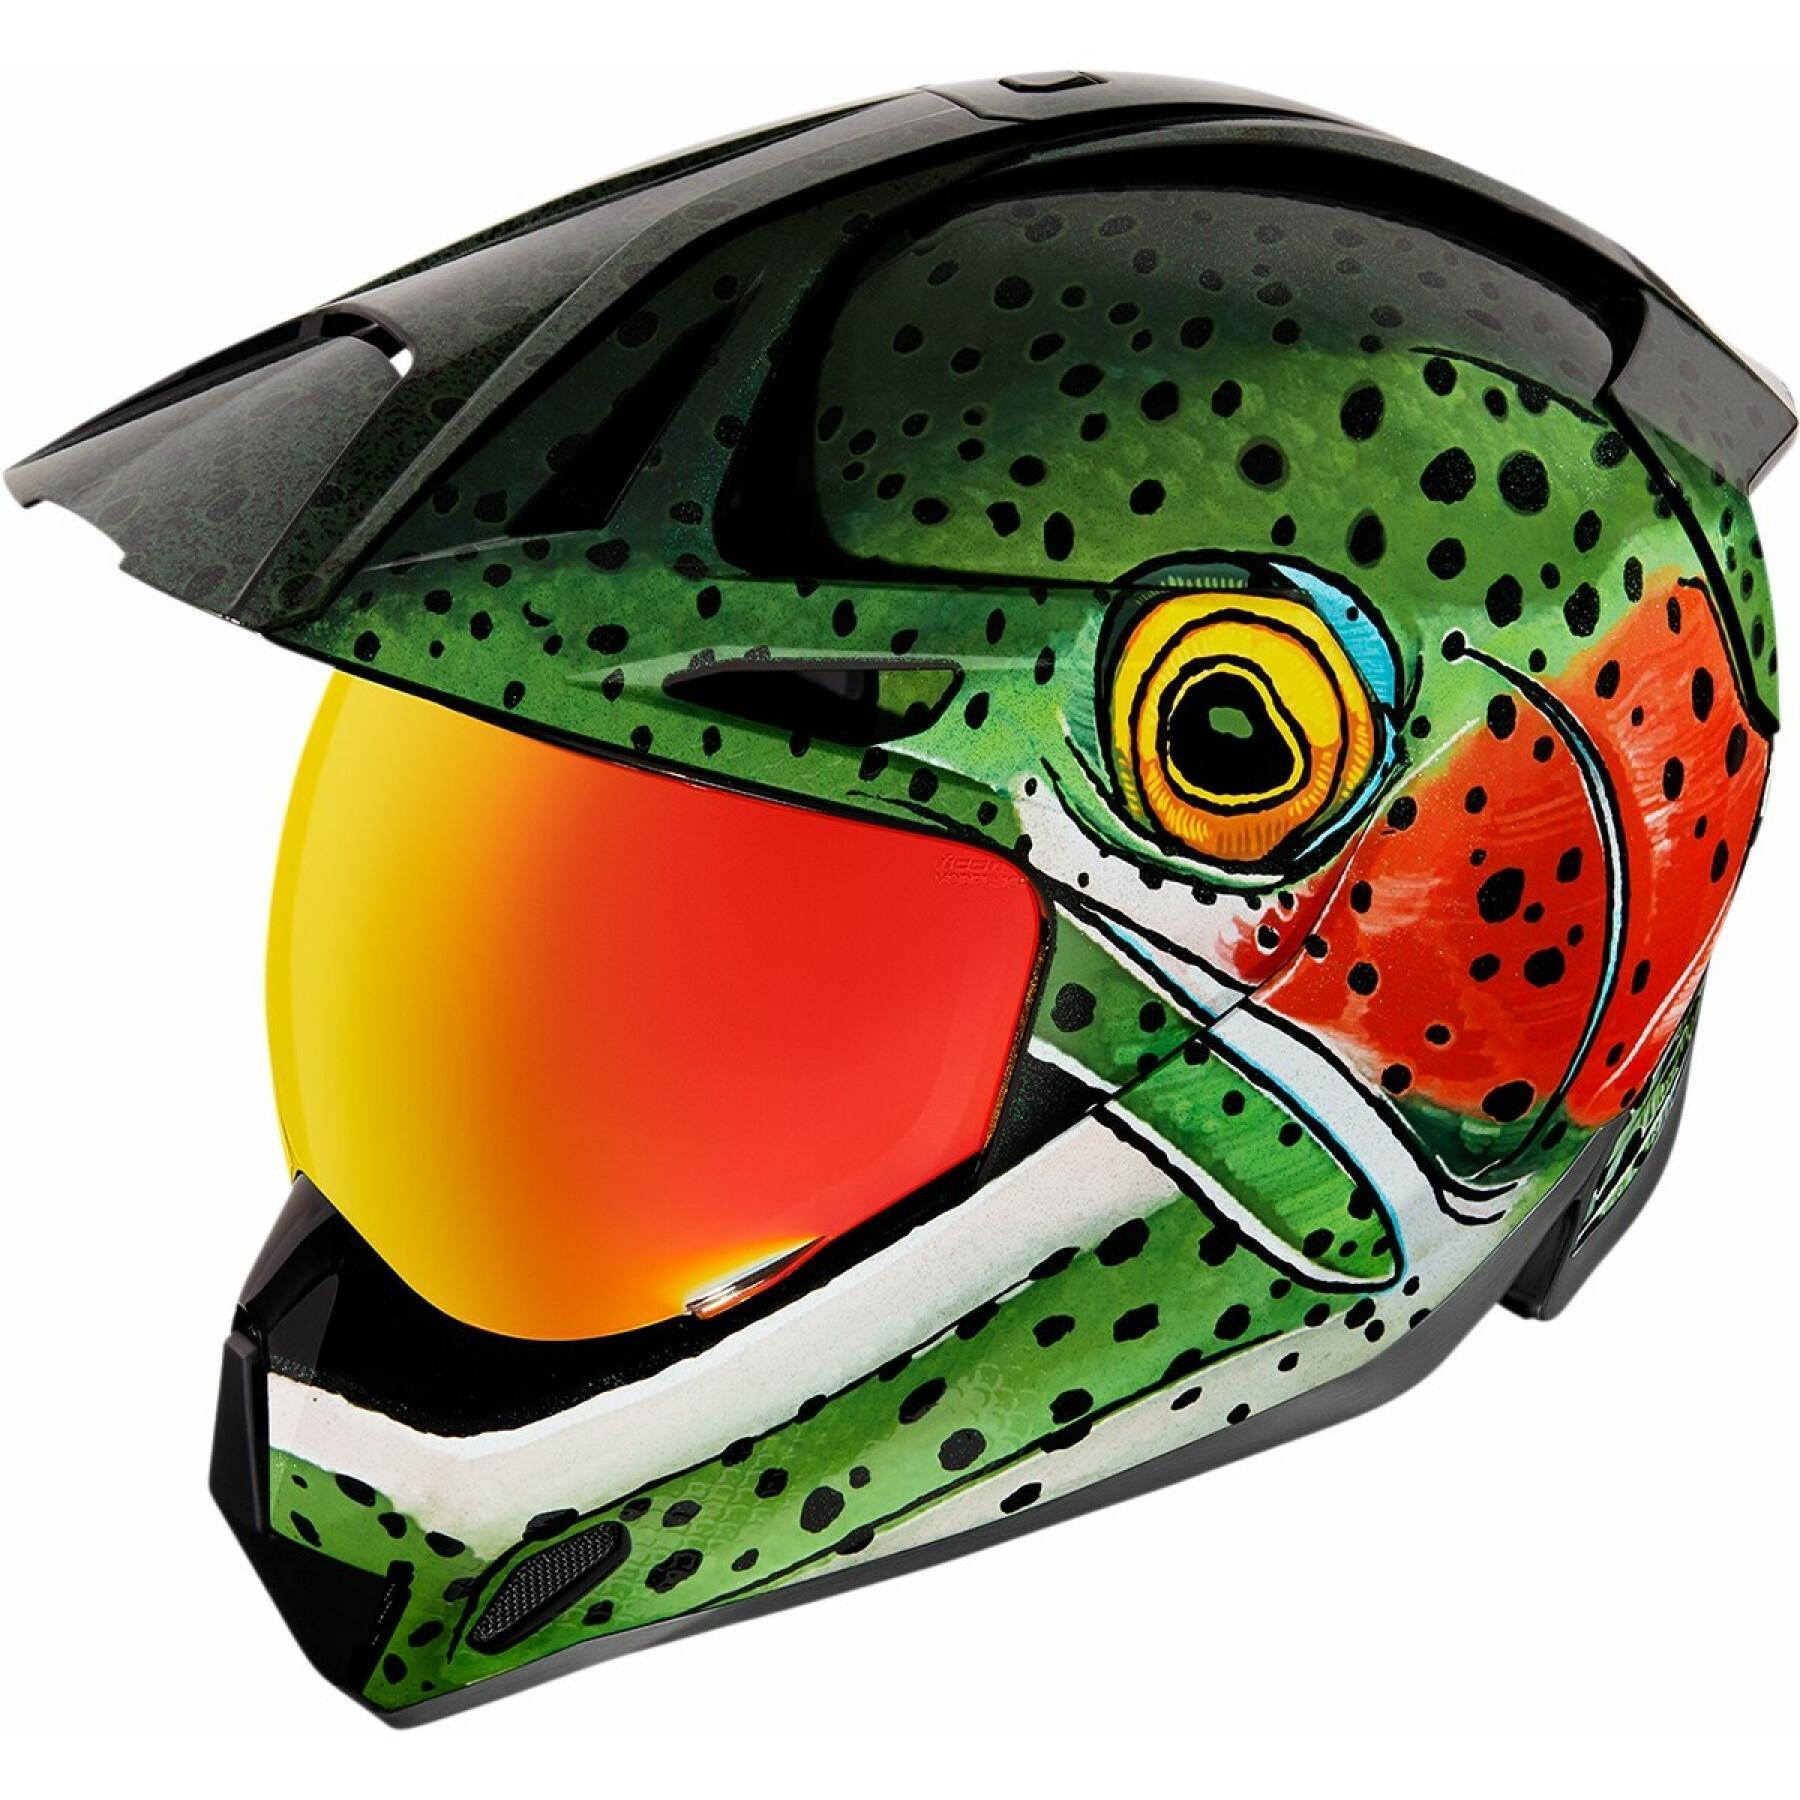 Motorcycle helmet Icon Variant Pro Bug Chucker